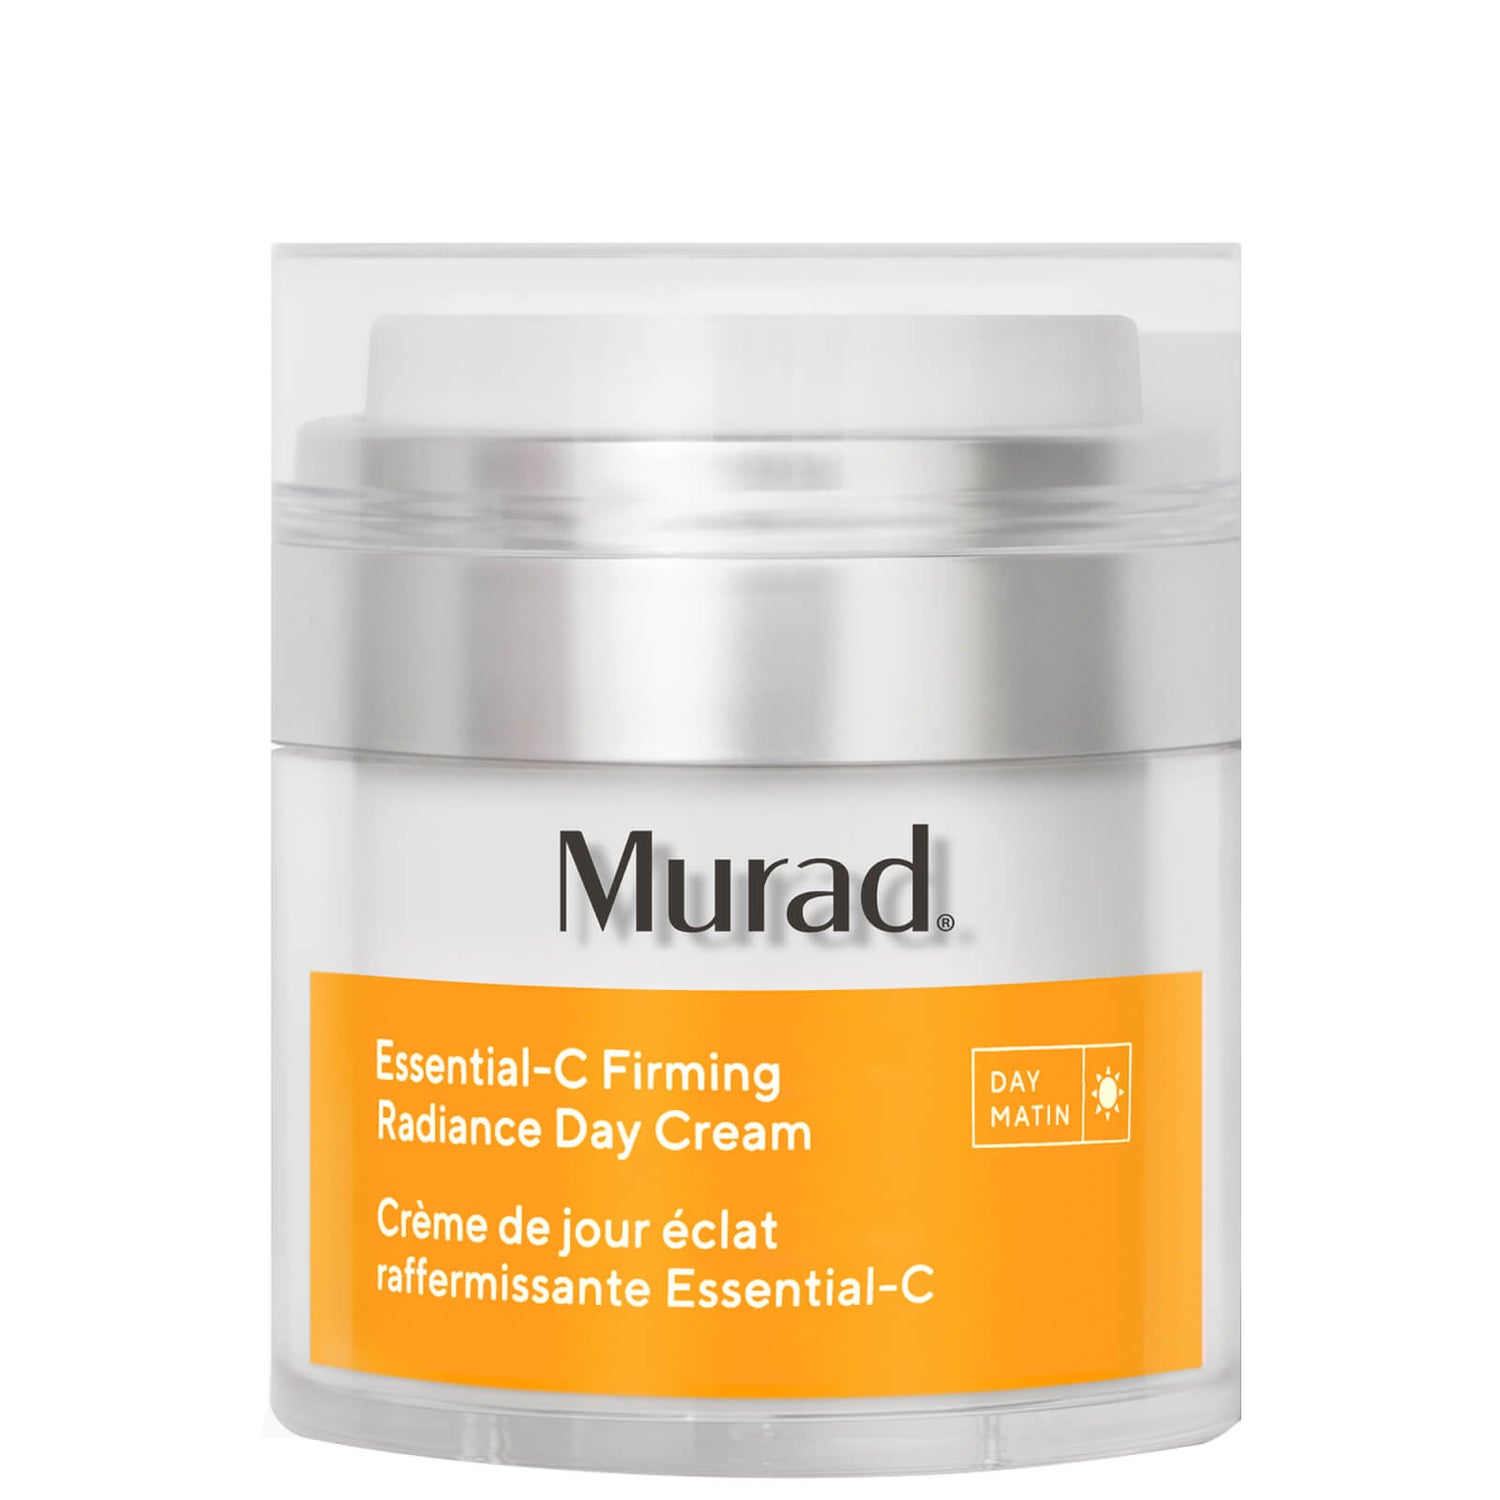 Murad Essential-C Firming Radiance Day Cream 1.7 oz